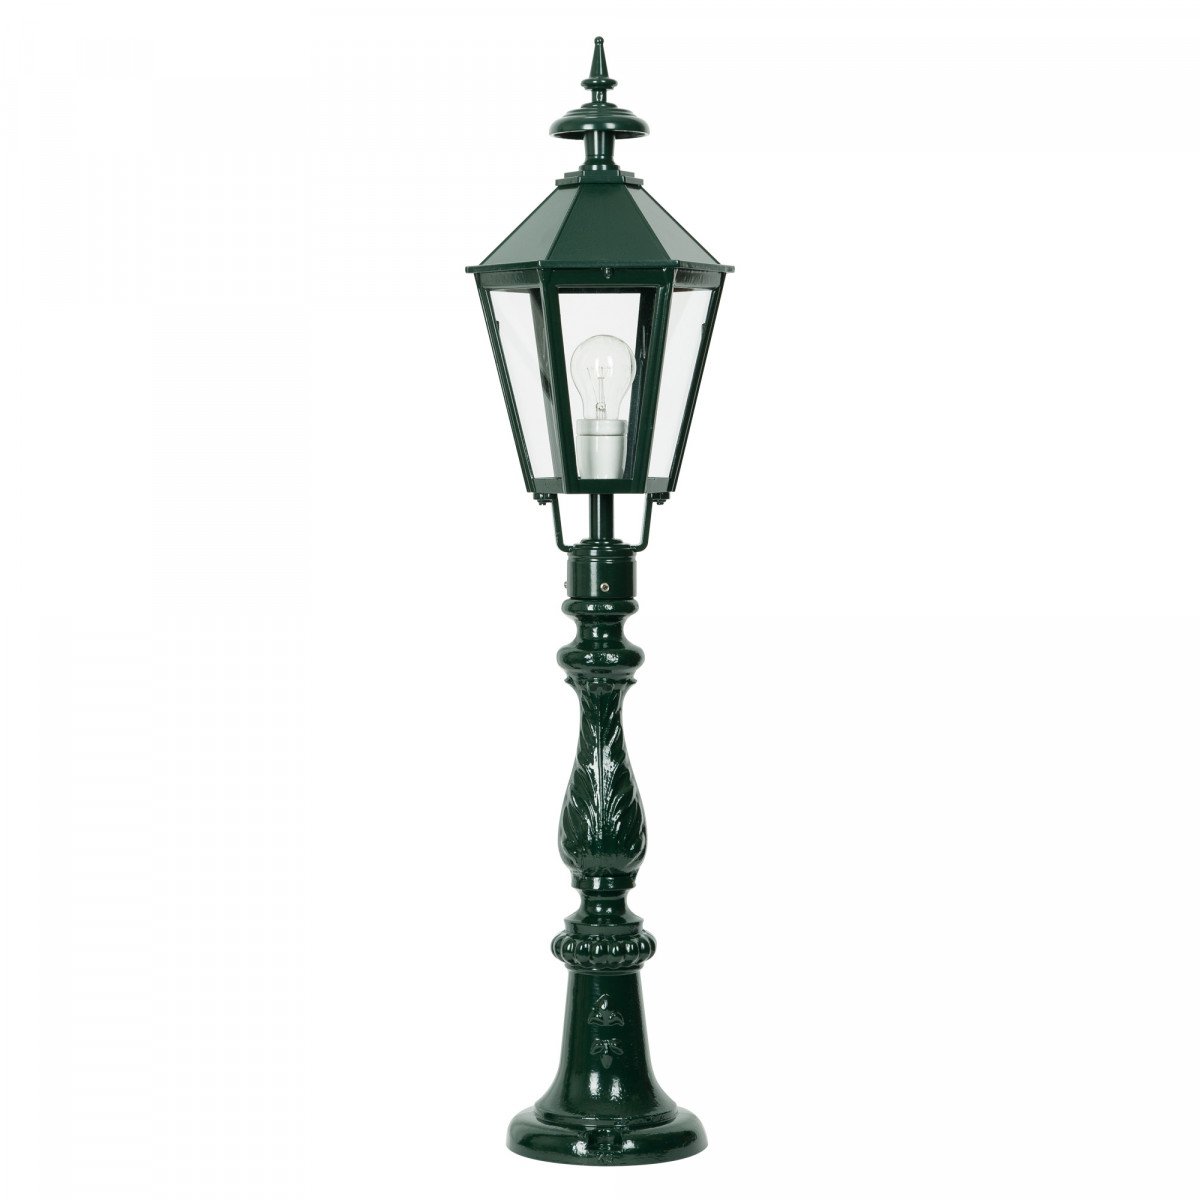 Petit lampadaire de jardin Oxford 14 (1006) de KS Lighting avec lanterne hexagonale